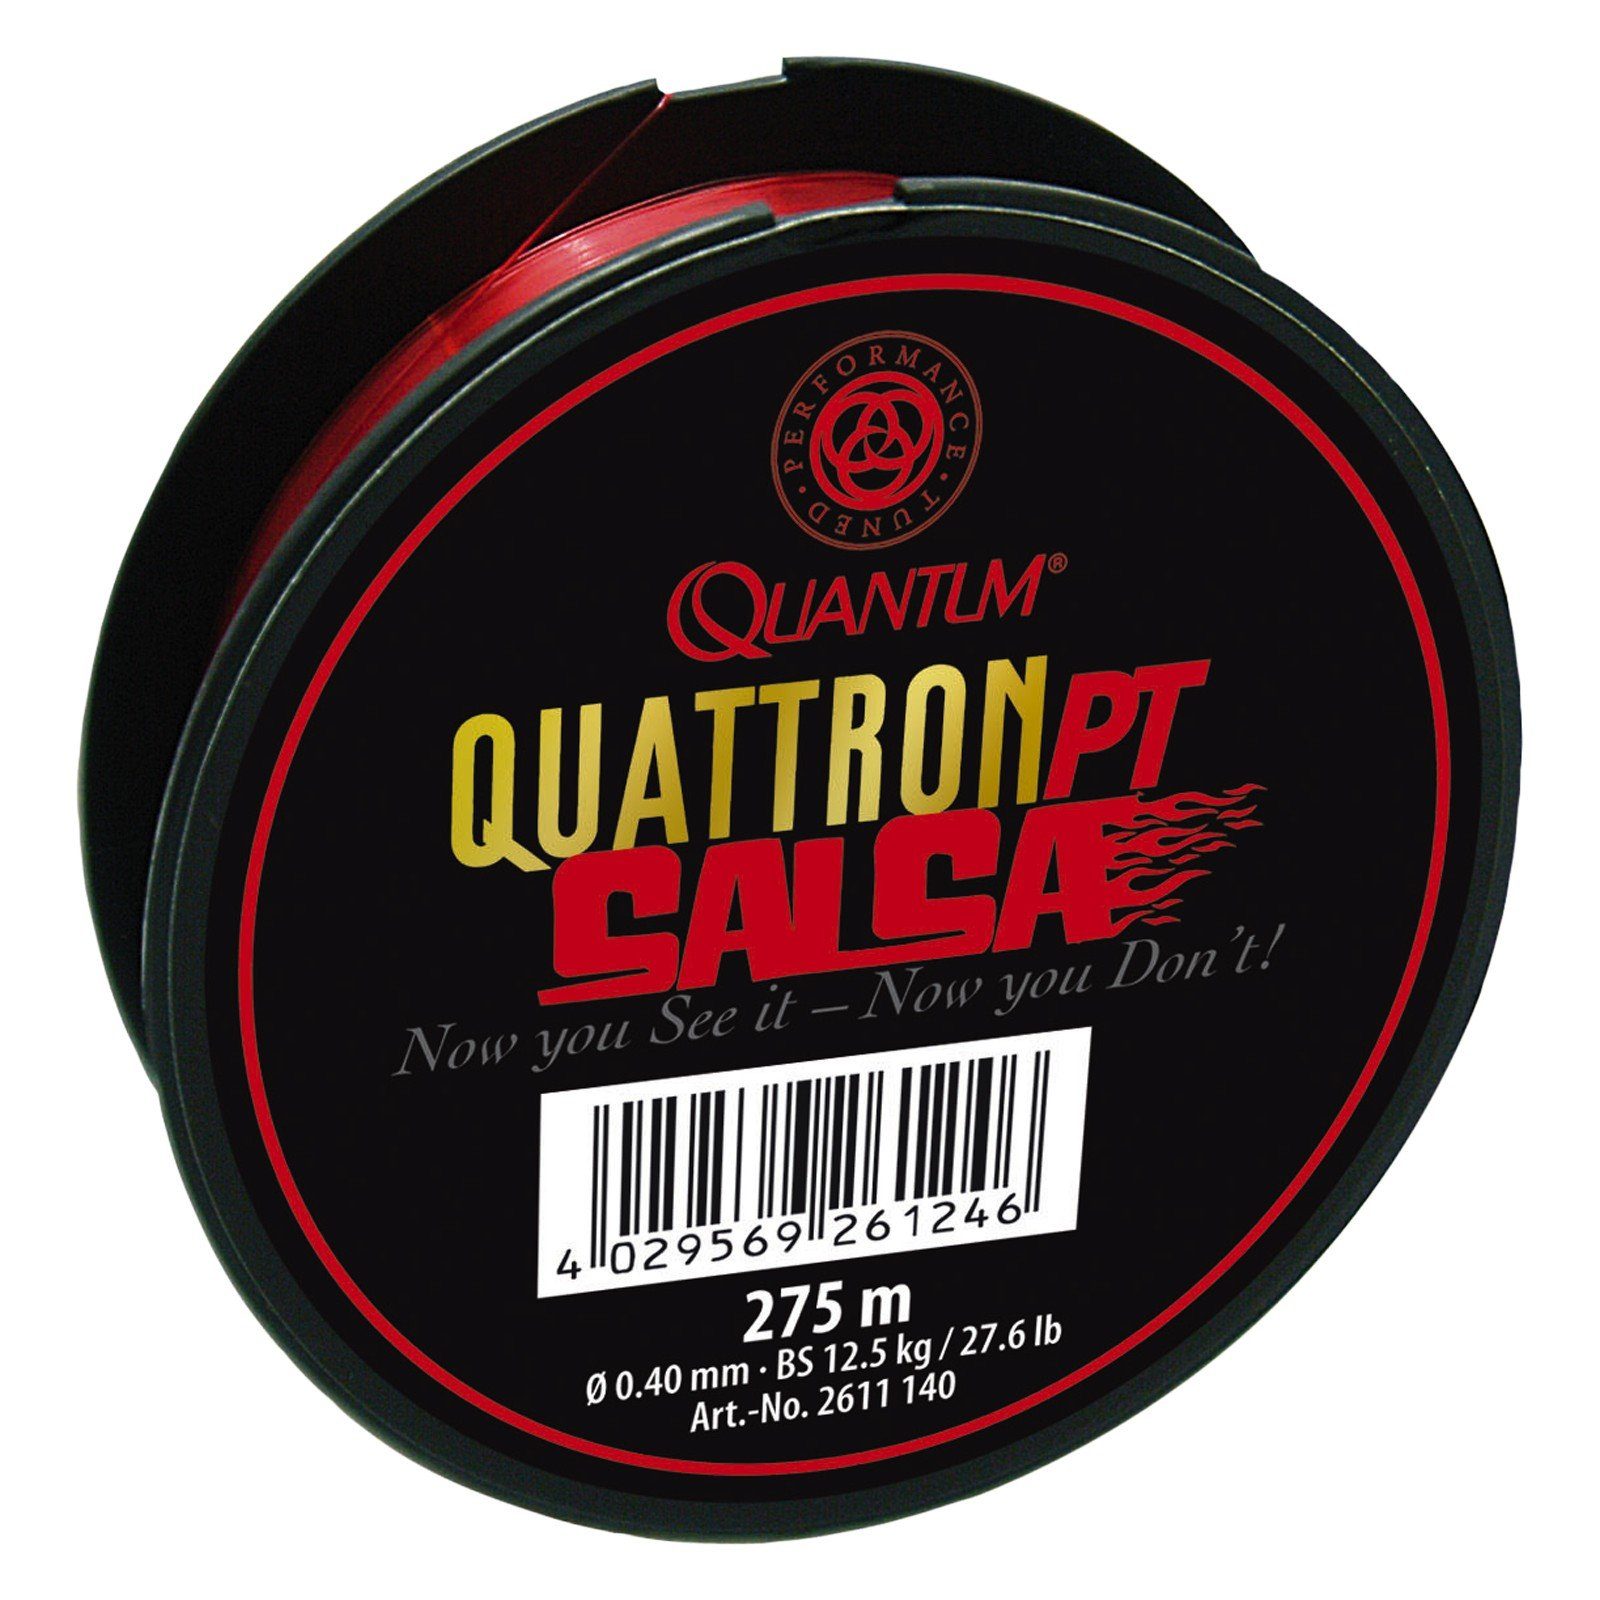 Quantum Angelschnur, Quantum Quattron PT Salsa Red 275m 0,35 Monofile Angelschnur